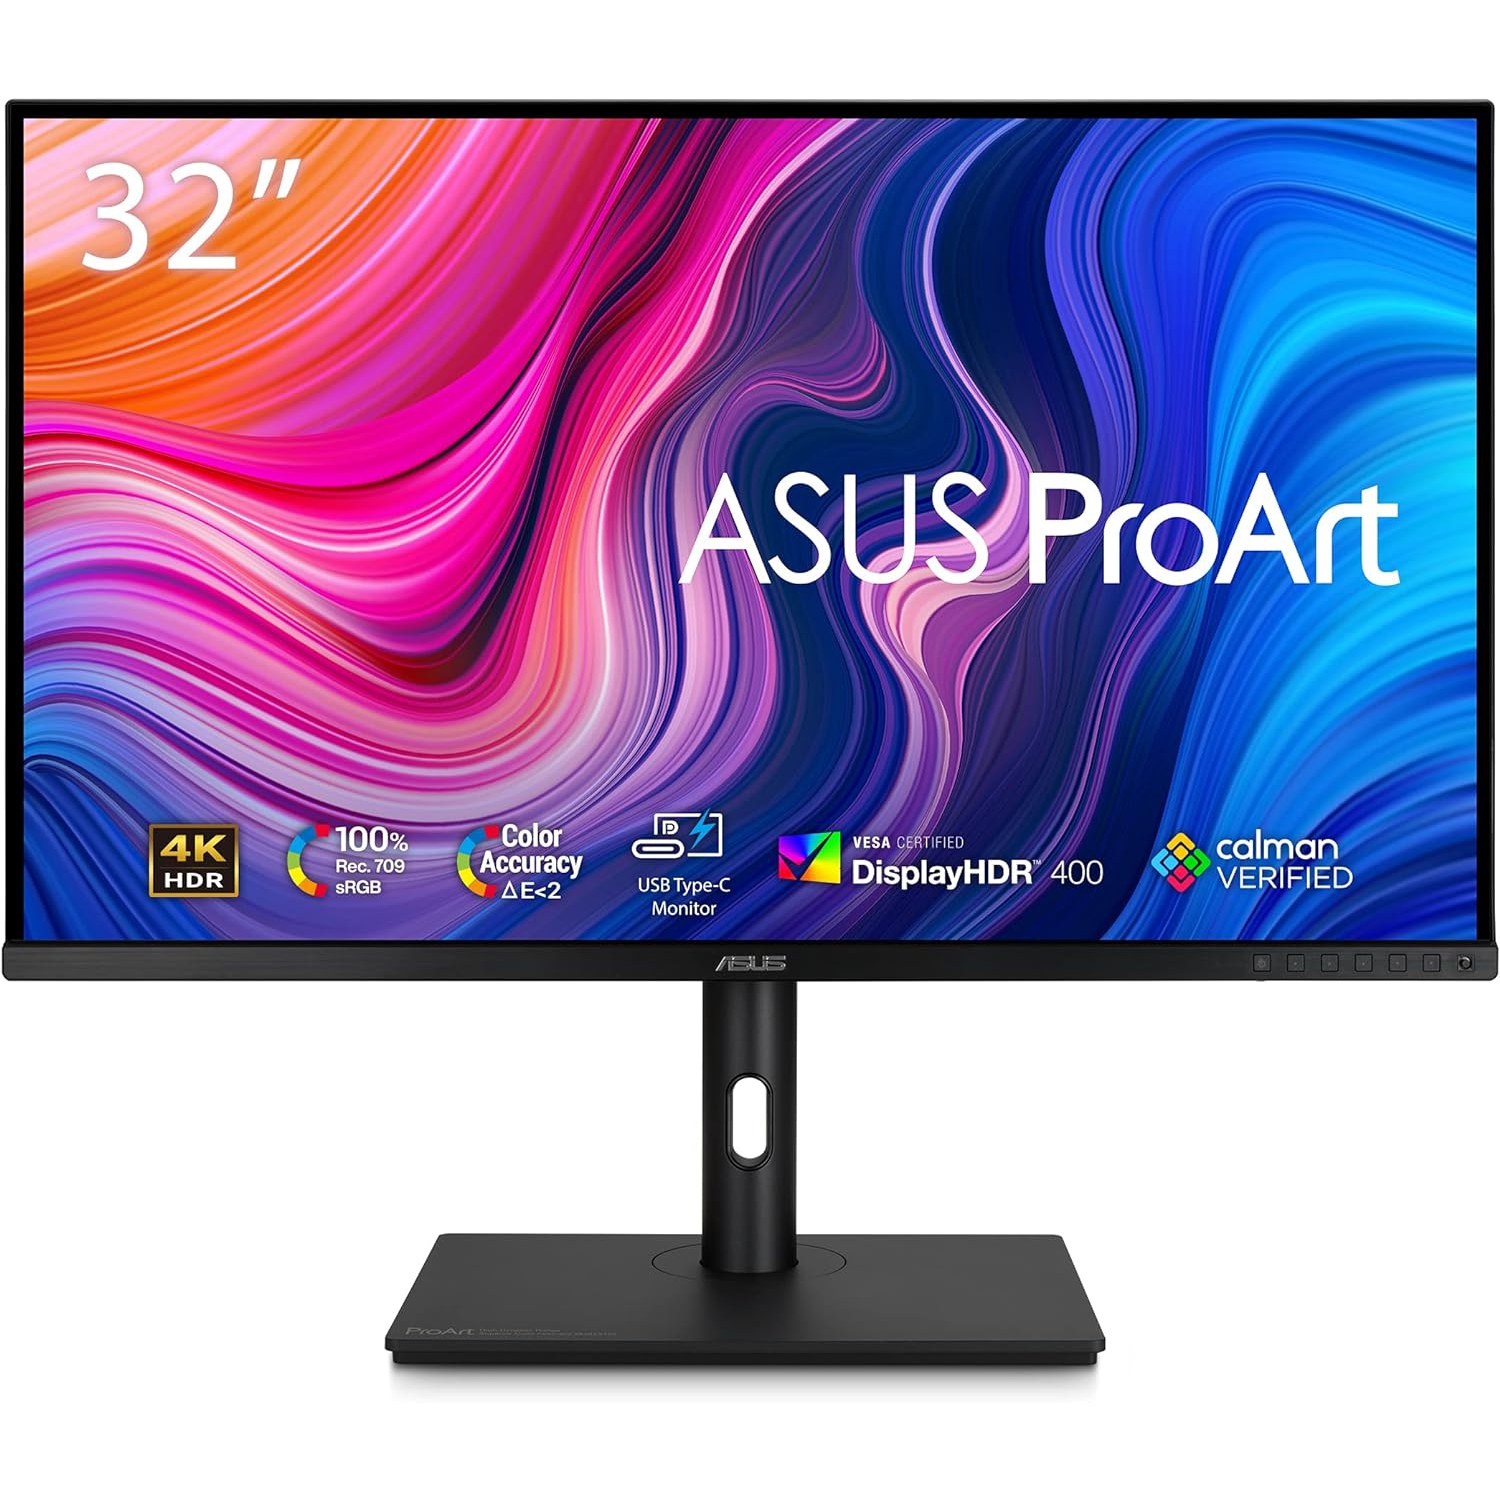 ASUS ProArt Display 32” 4K HDR Monitor (PA329CV) - UHD (3840 x 2160), IPS, 100% sRGB/Rec.709, Calman Verified, USB-C Delivery